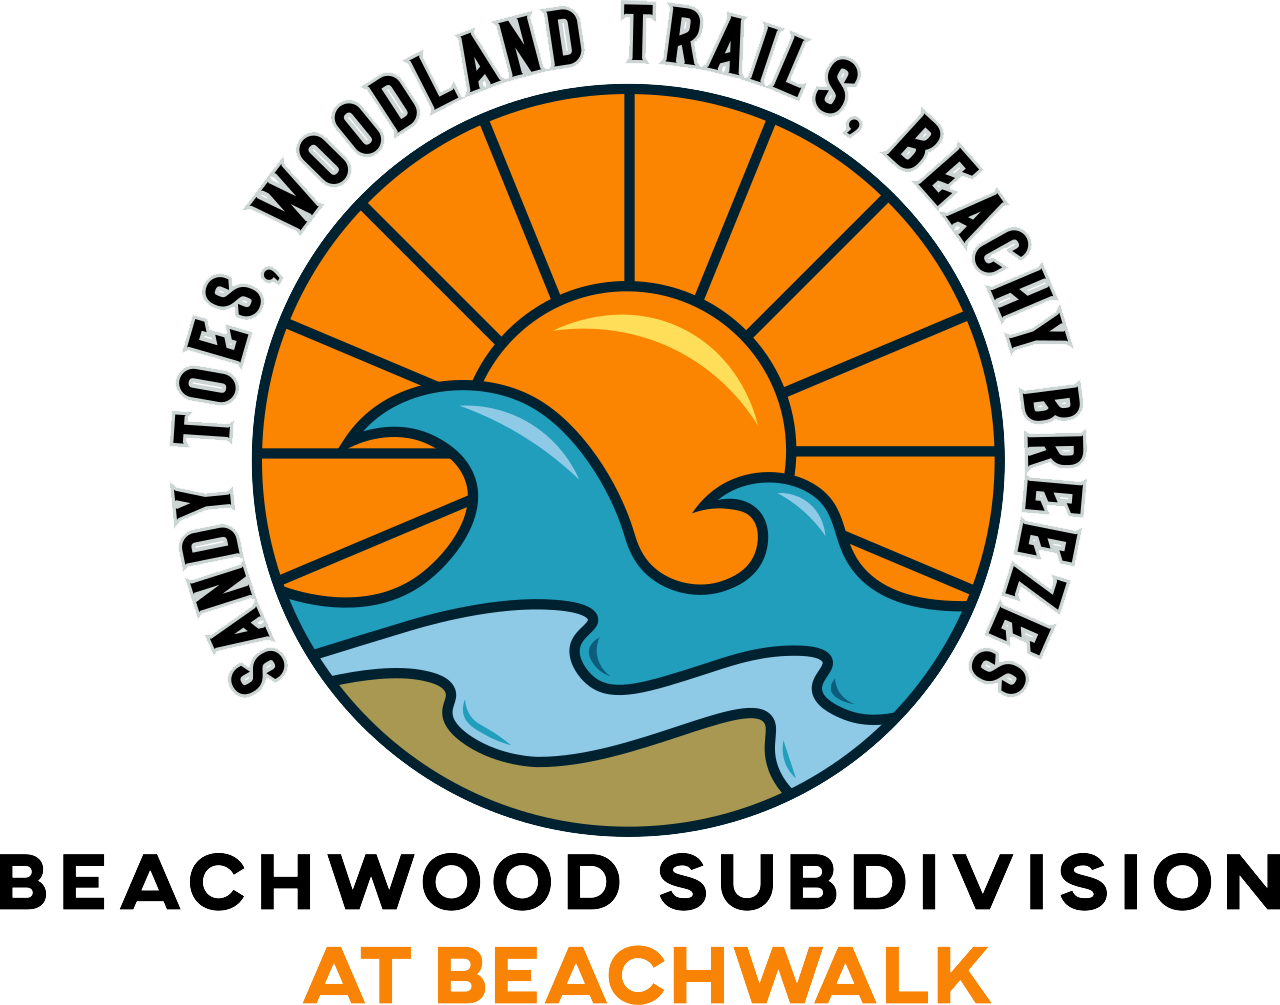 Beachwood Subdivision full logo